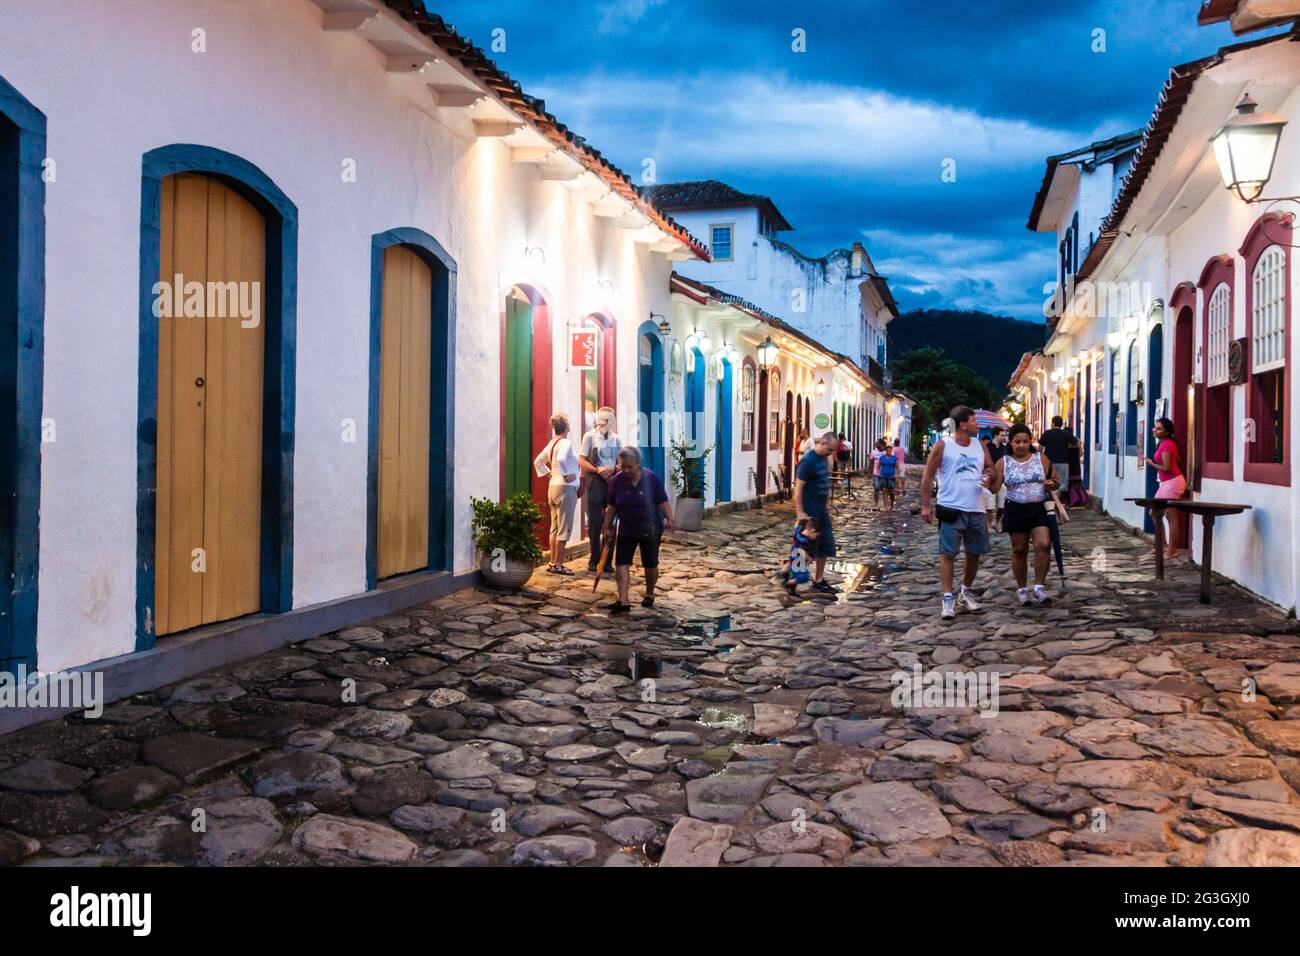 PARATY, BRAZIL - JANUARY 30, 2015: People walk in a narrow street an old colonial town Paraty, Brazil Stock Photo